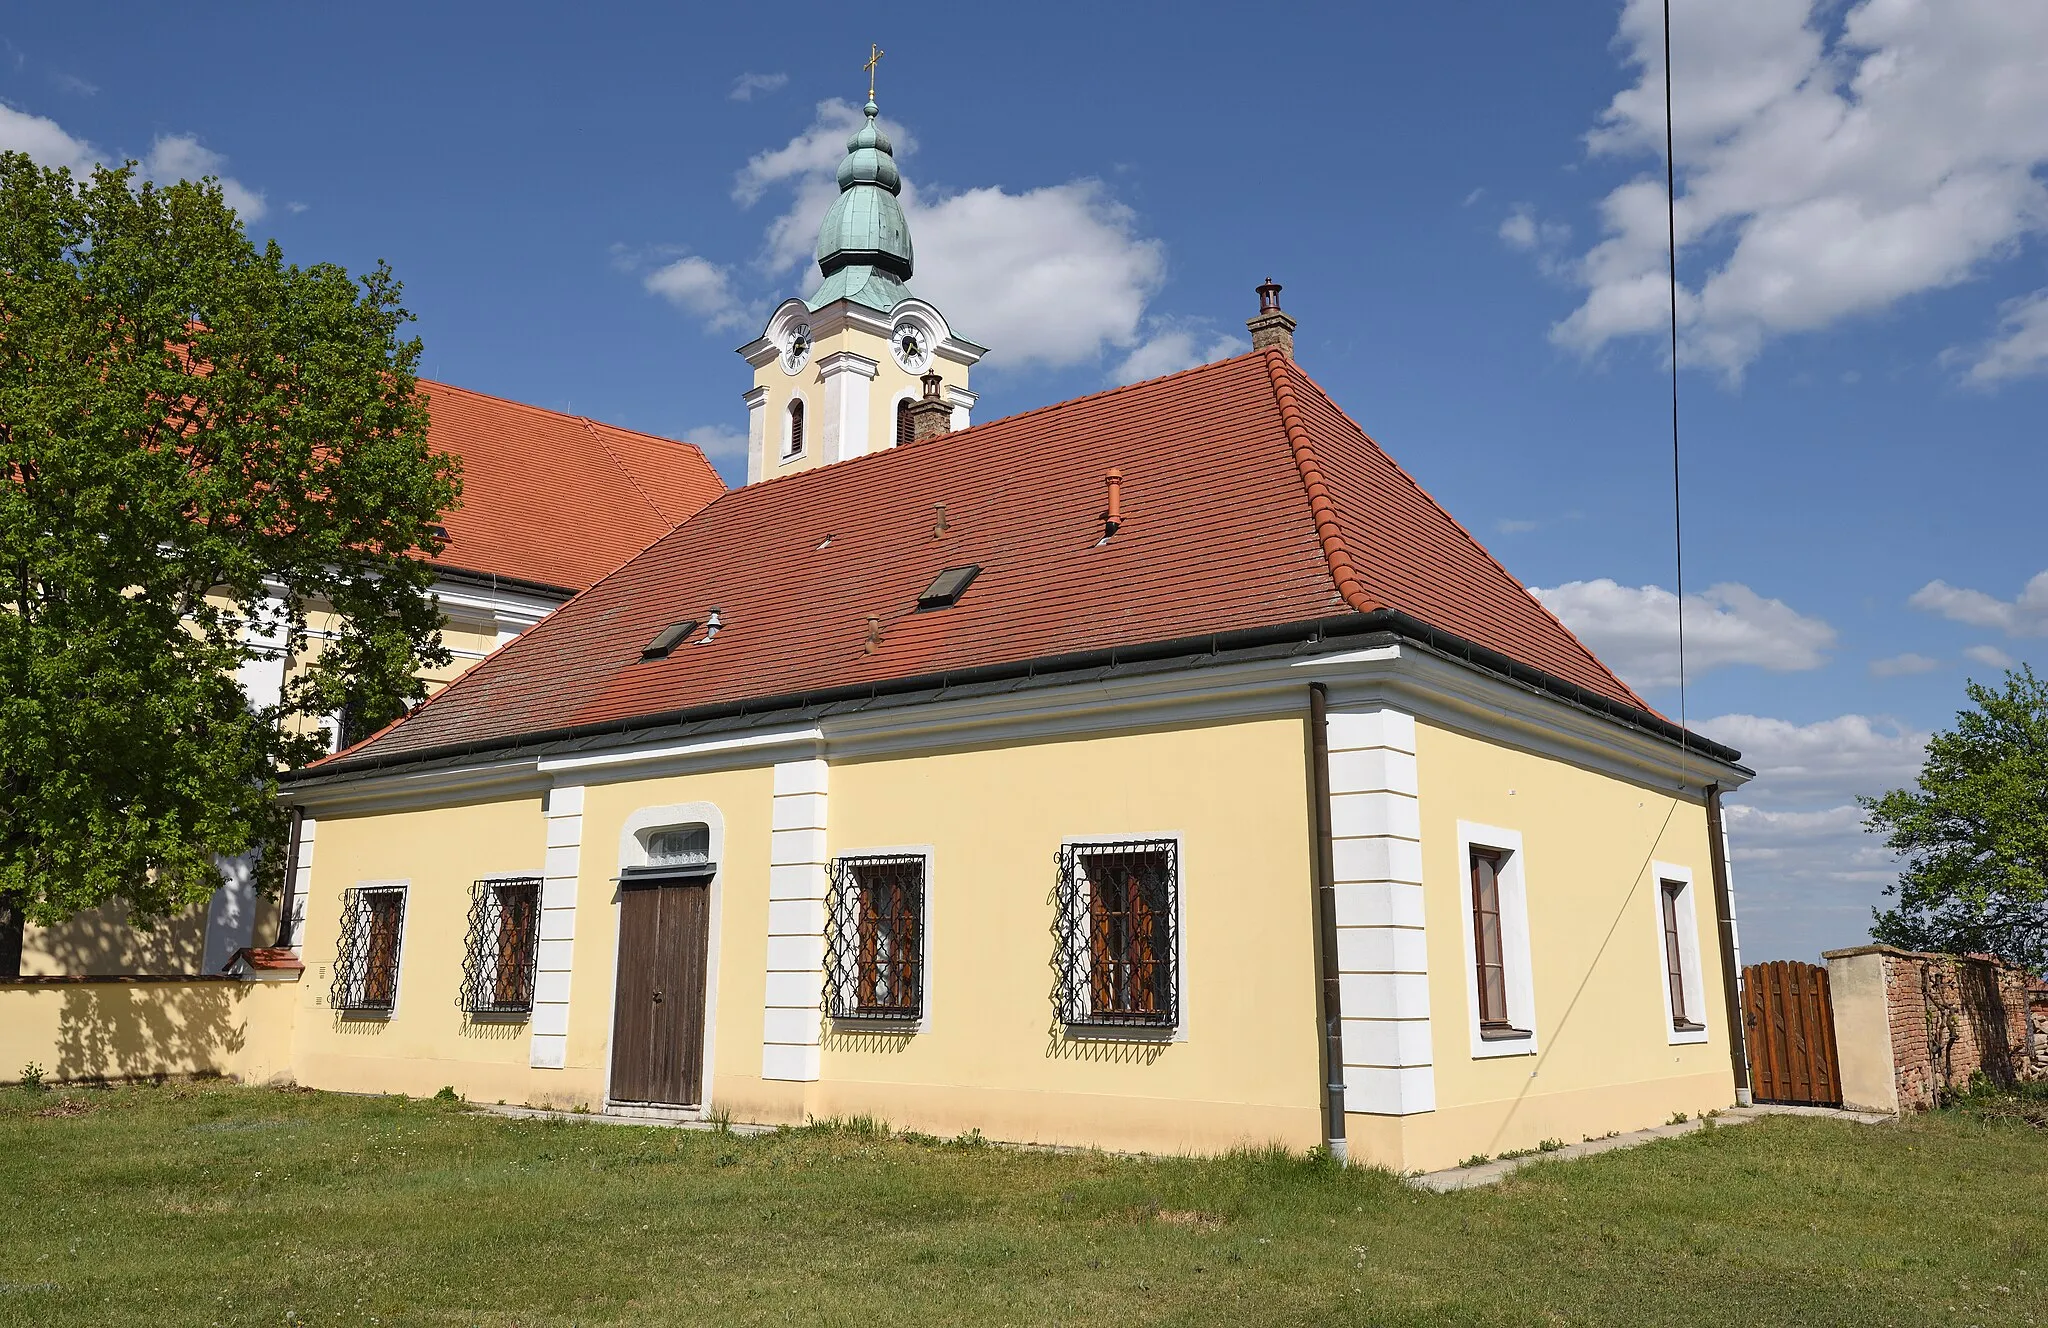 Photo showing: Rectory at Großinzersdorf, municipality Zistersdorf, Lower Austria, Austria